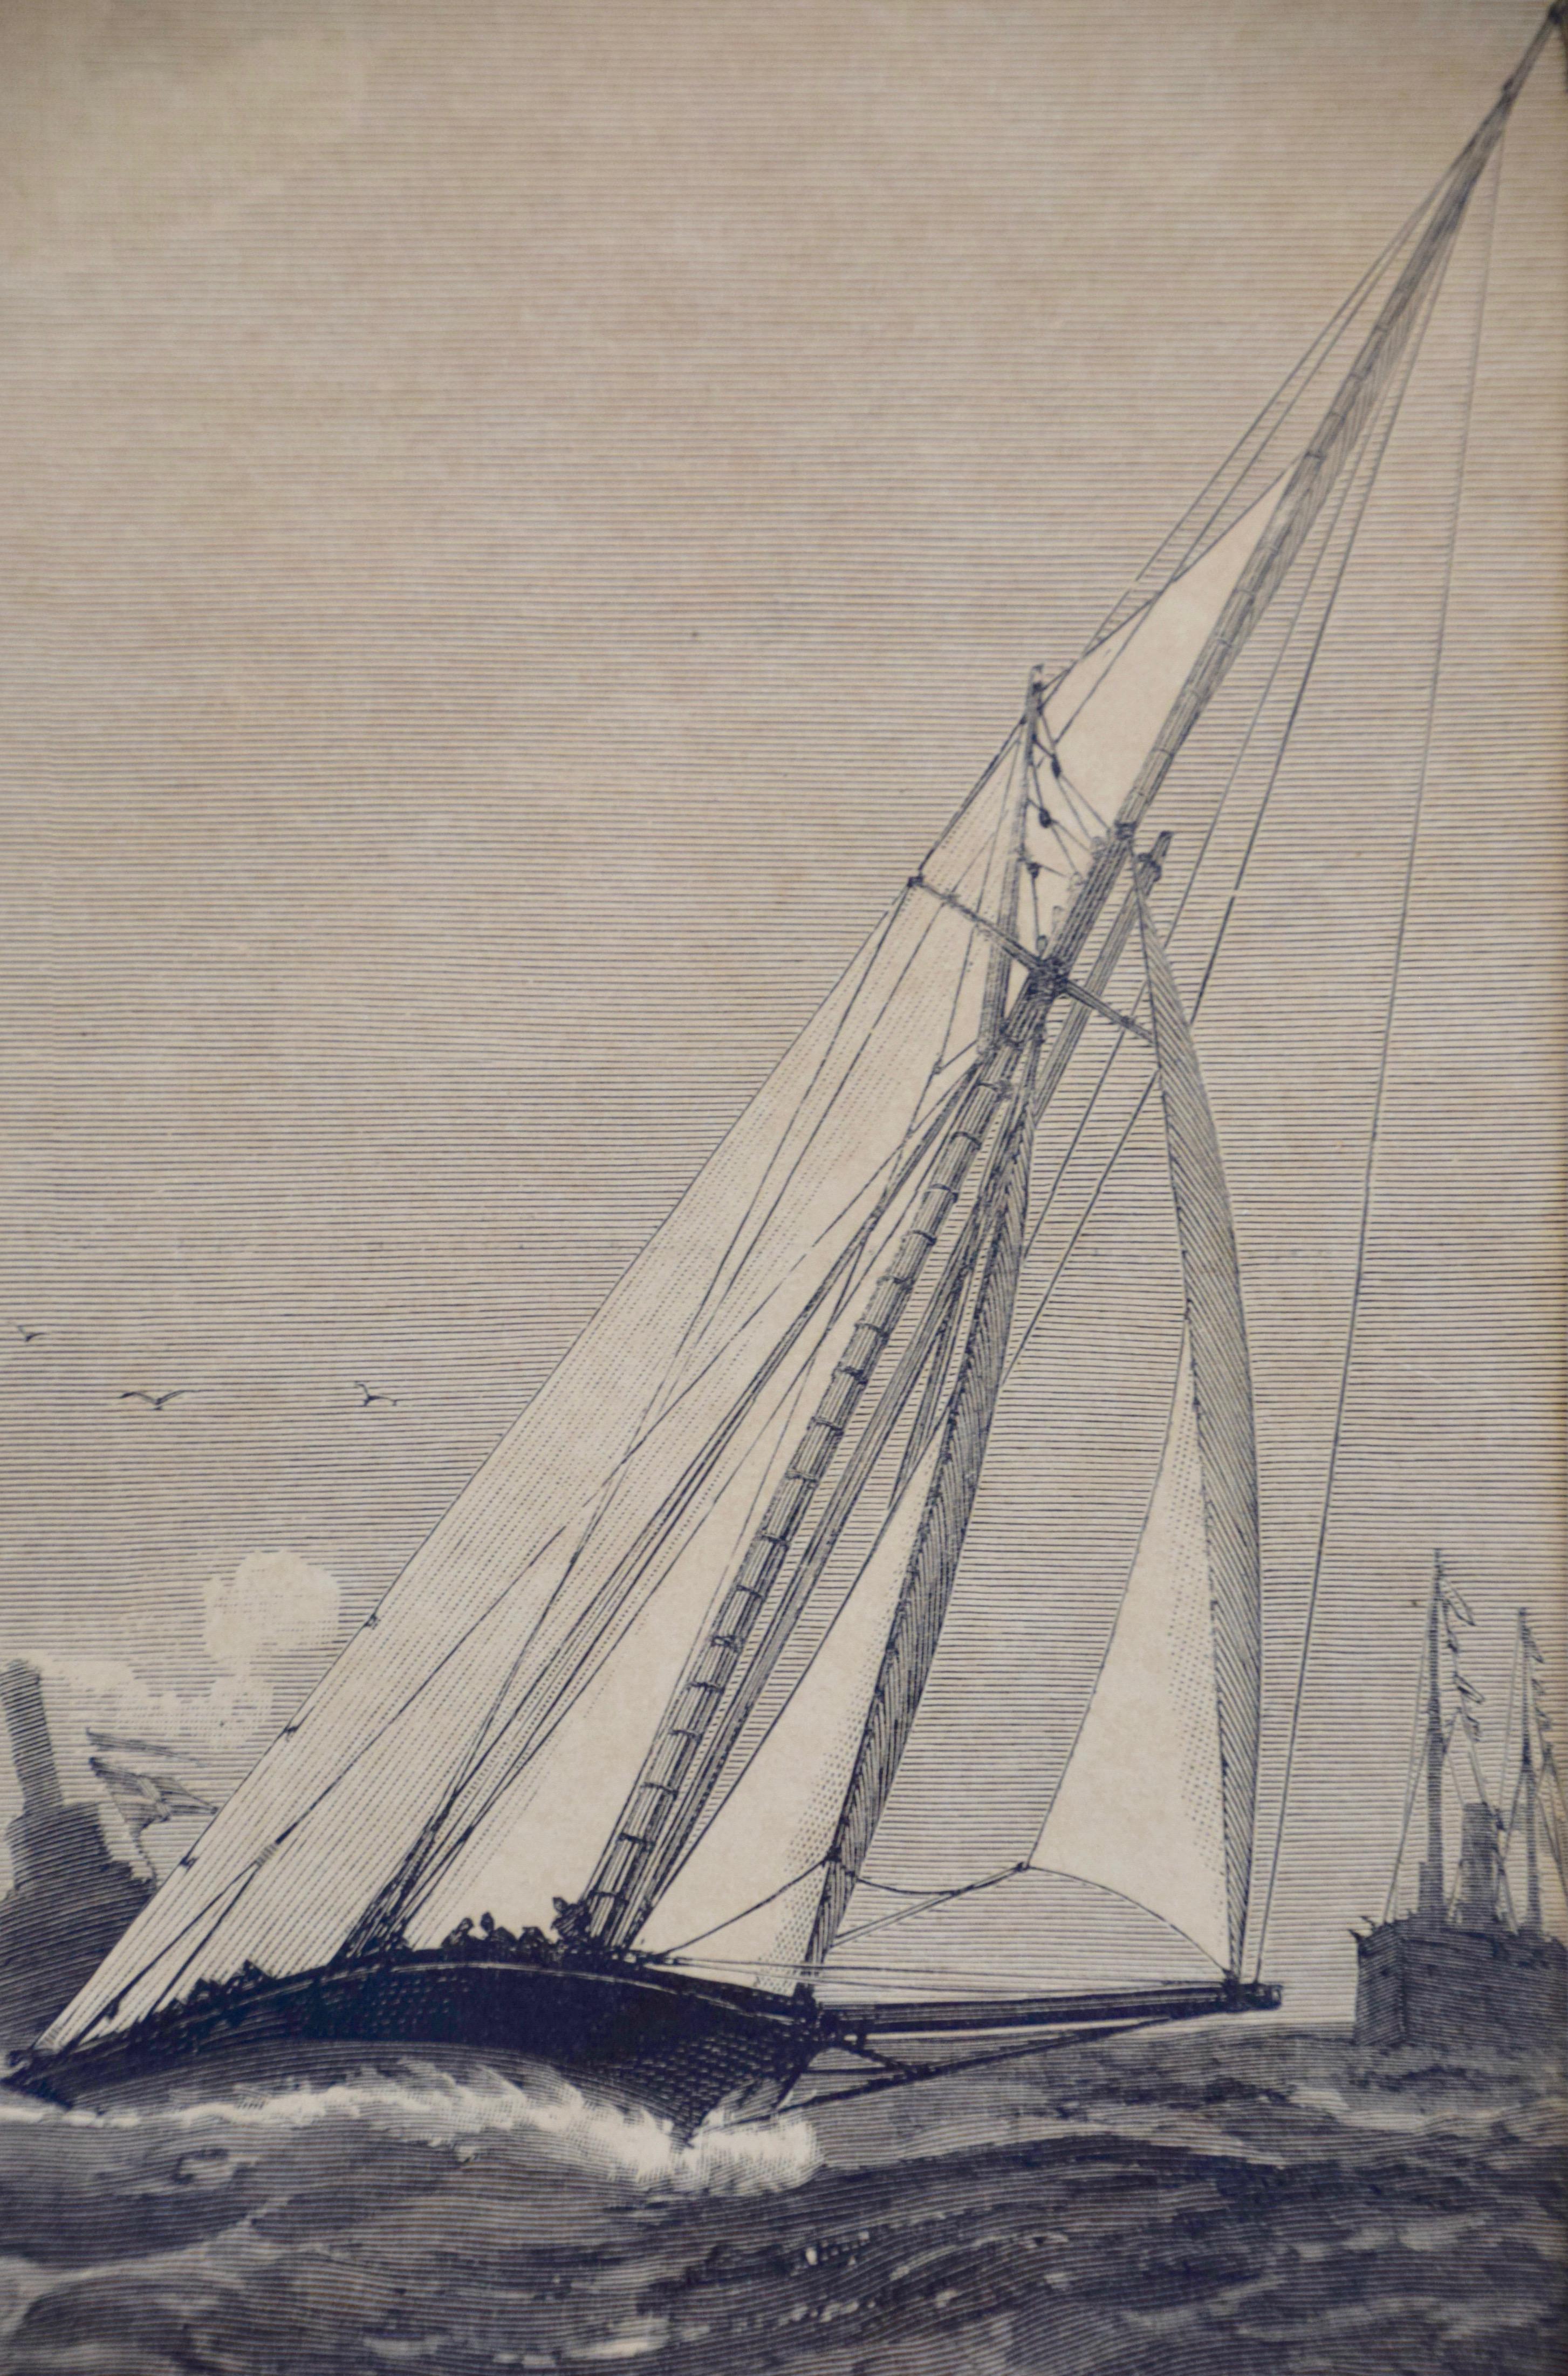 1885 America's Cup Sailing Yachts: Set of 3 Original 19th C. Engravings 3